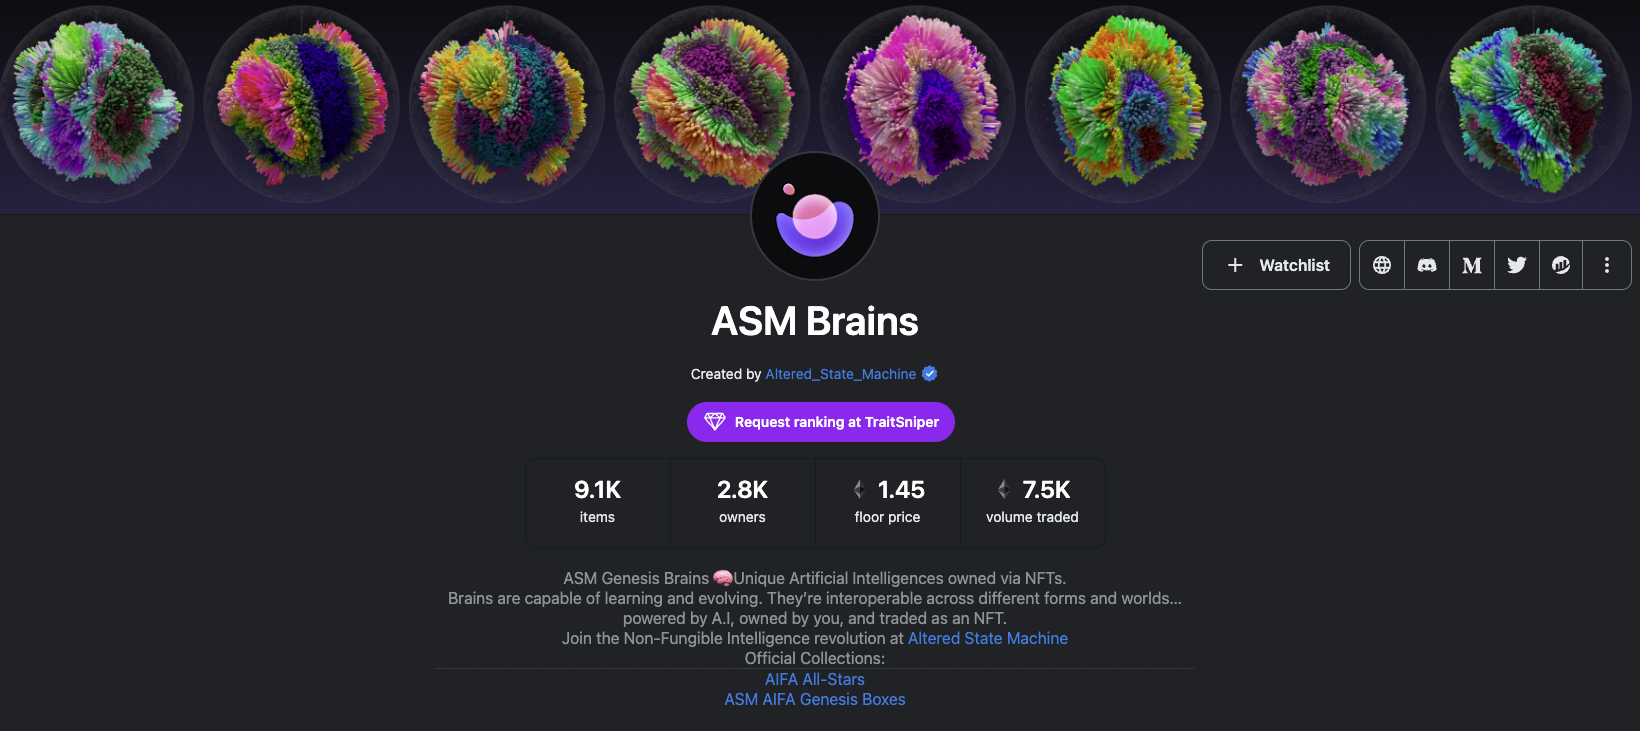 https://opensea.io/collection/asm-brains